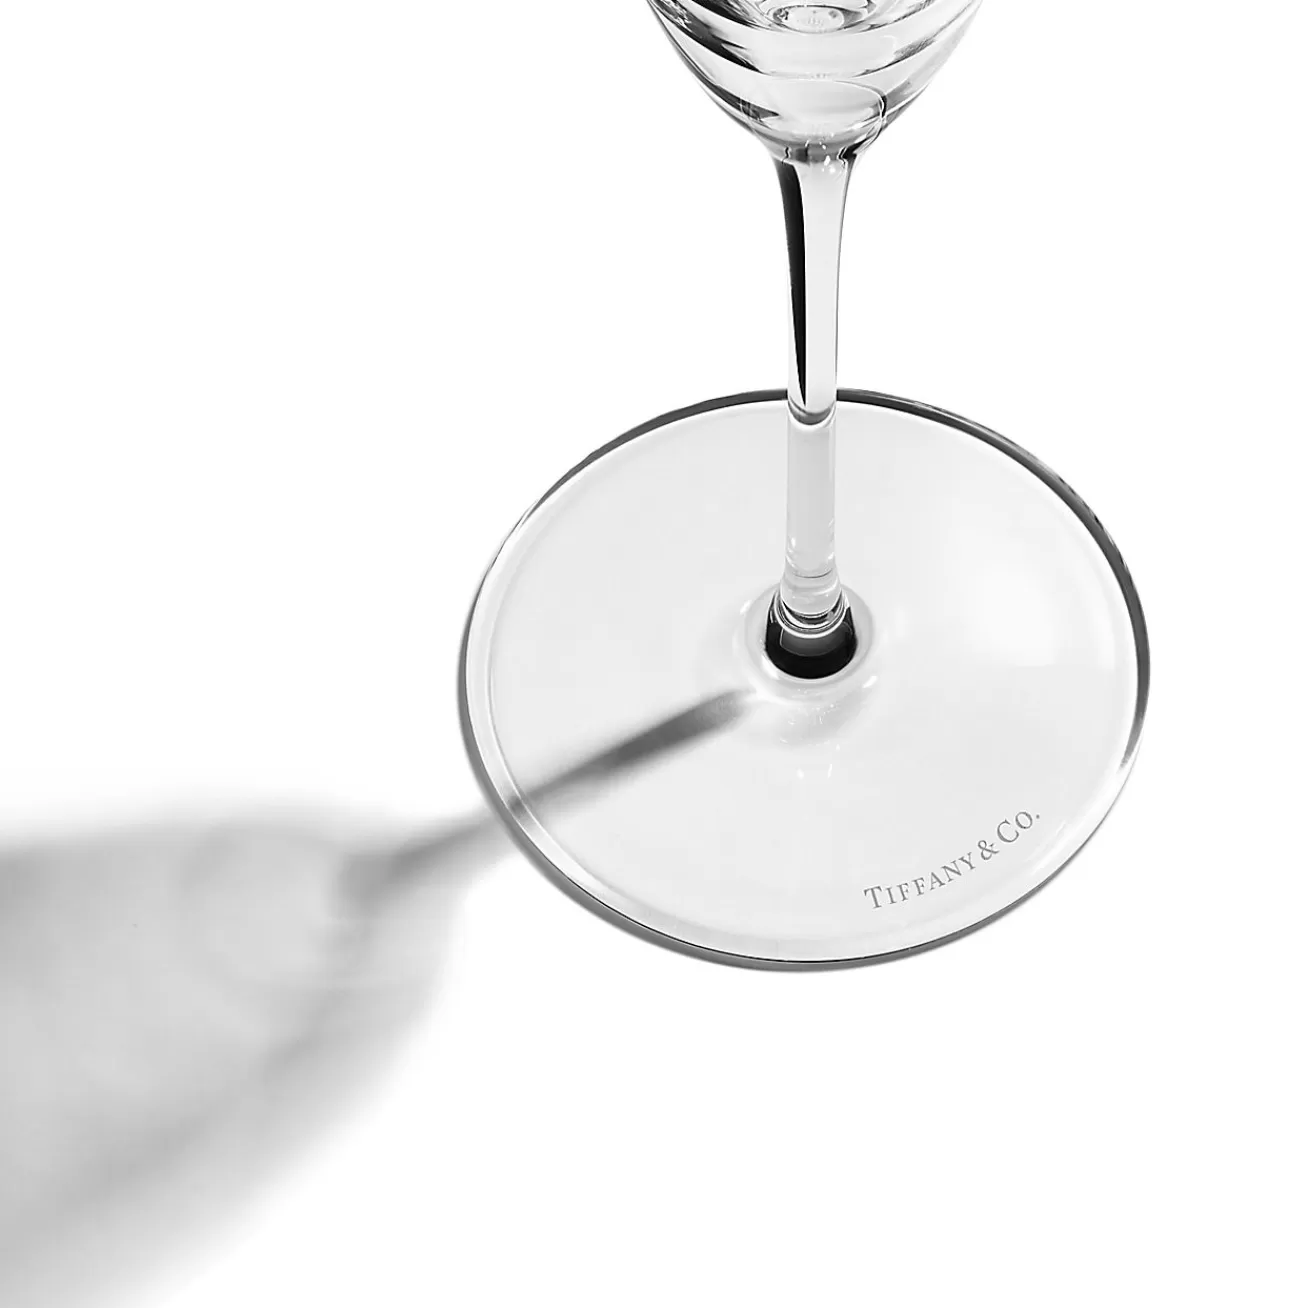 Tiffany & Co. Tiffany Wisteria Champagne Glasses in Etched Glass, Set of Two | ^ Tableware | Glassware & Barware